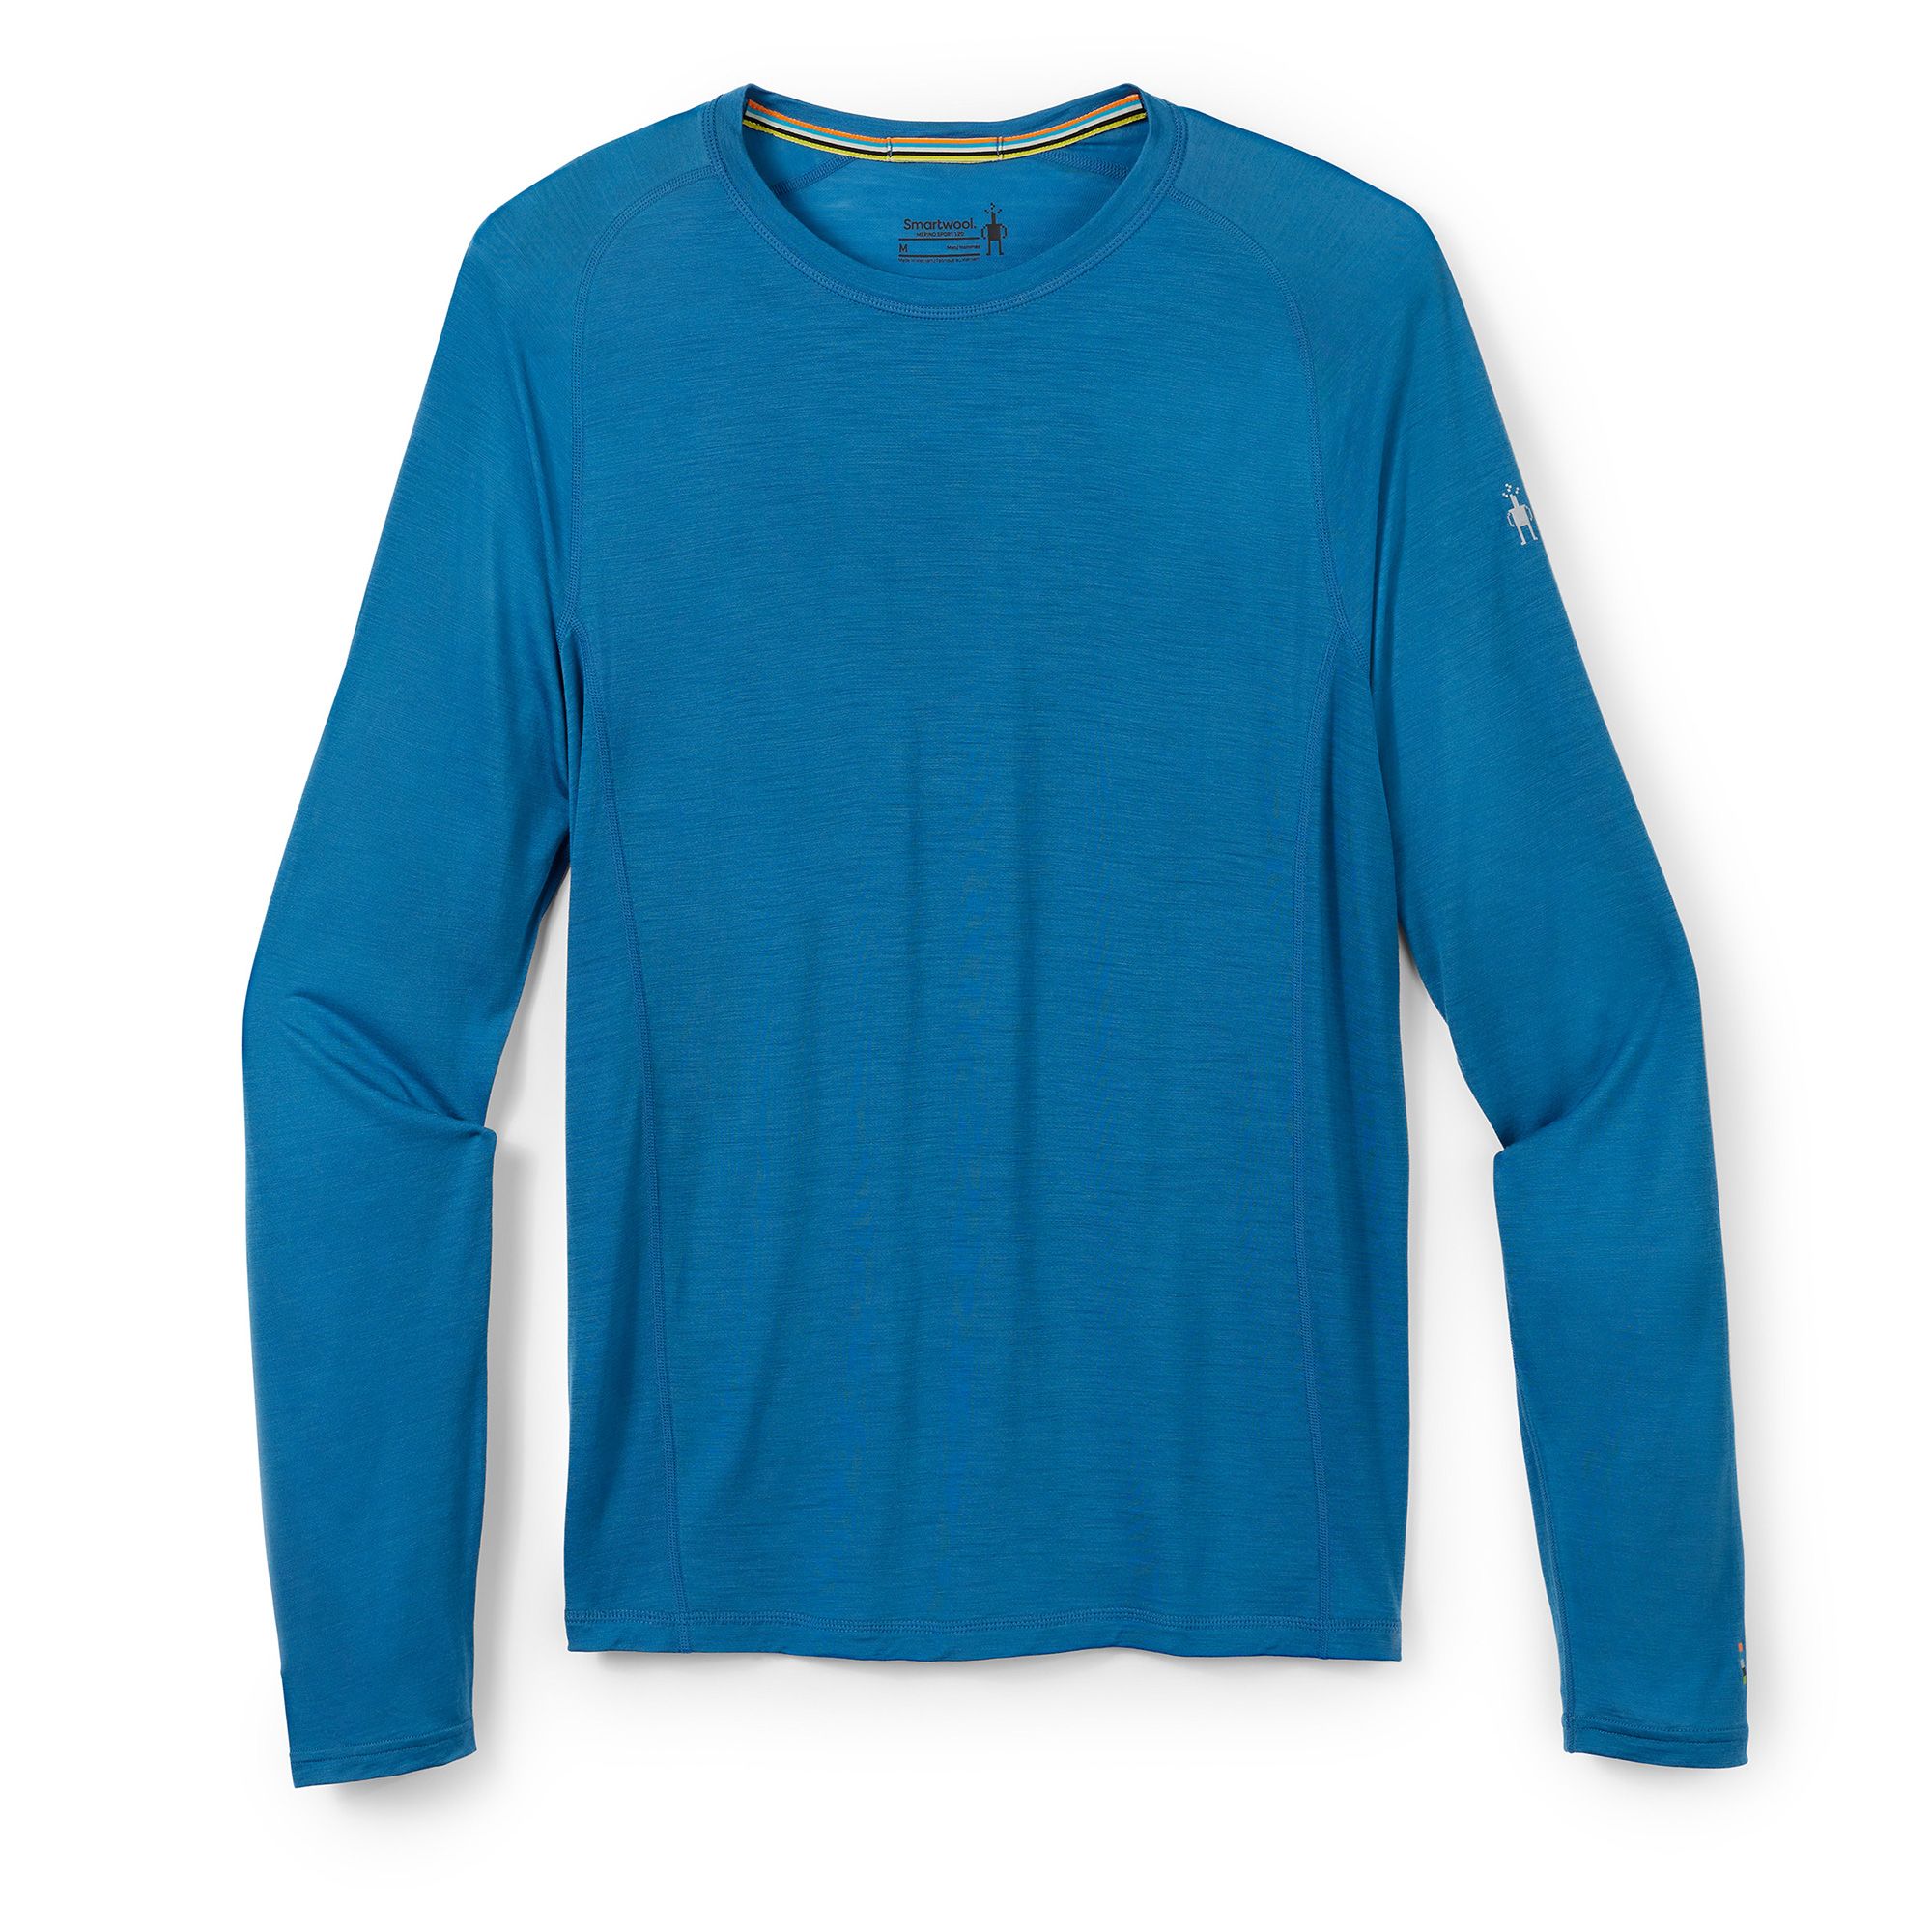 Orvis Shirt Adult XL Blue Crewneck Long Sleeve Mens RN 137013 Pullover